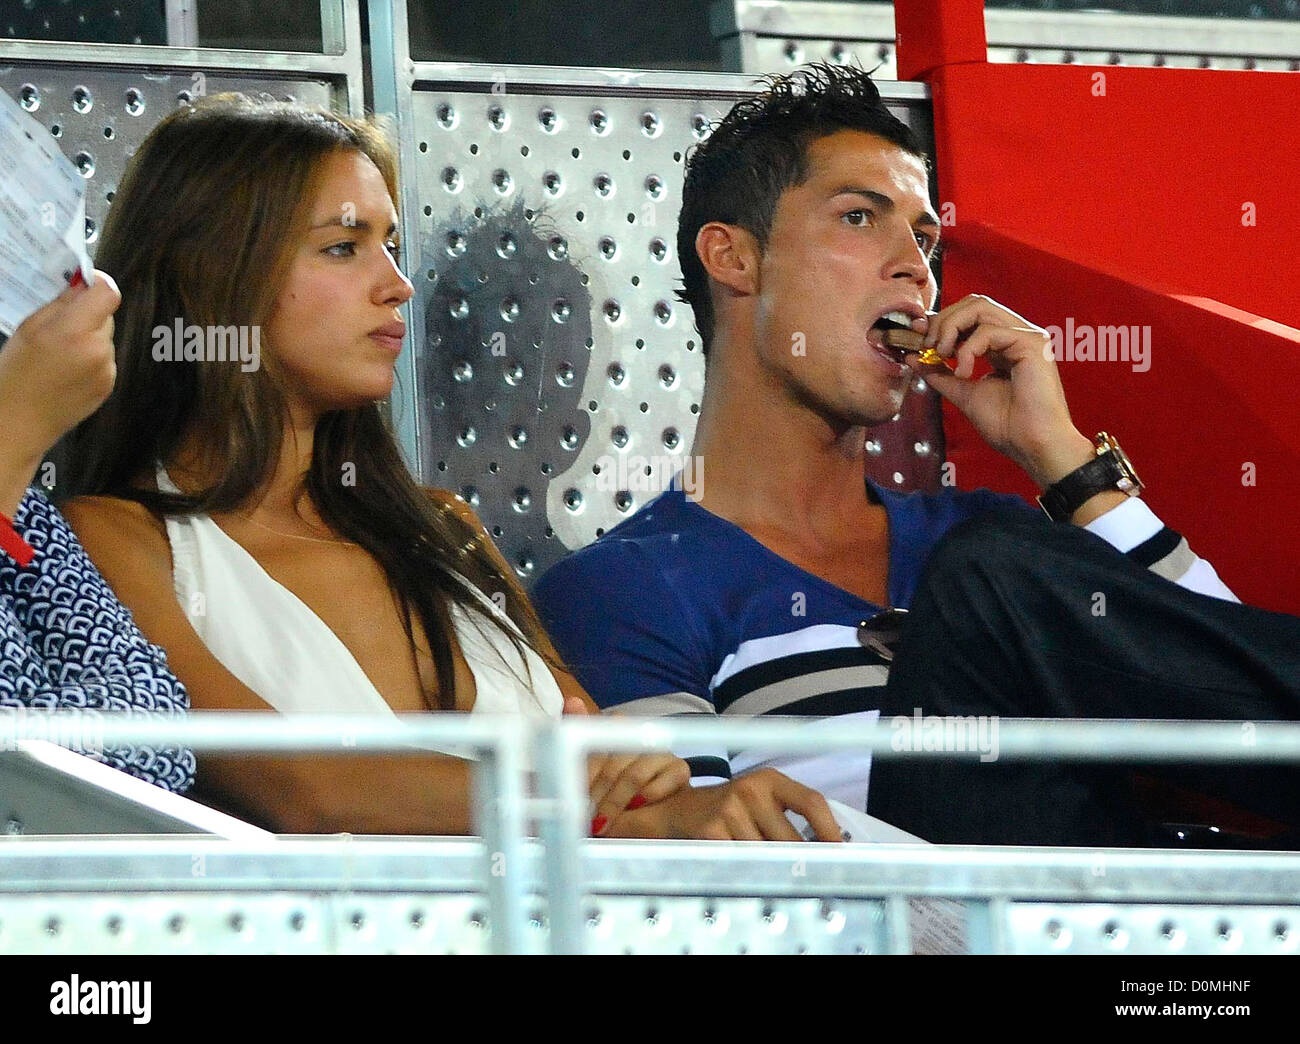 Cristiano Ronaldo and girlfriend Irina Shayk Spain vs USA basketball game  at the Caja Magica pavillion Madrid, Spain - 22.08.10 Stock Photo - Alamy